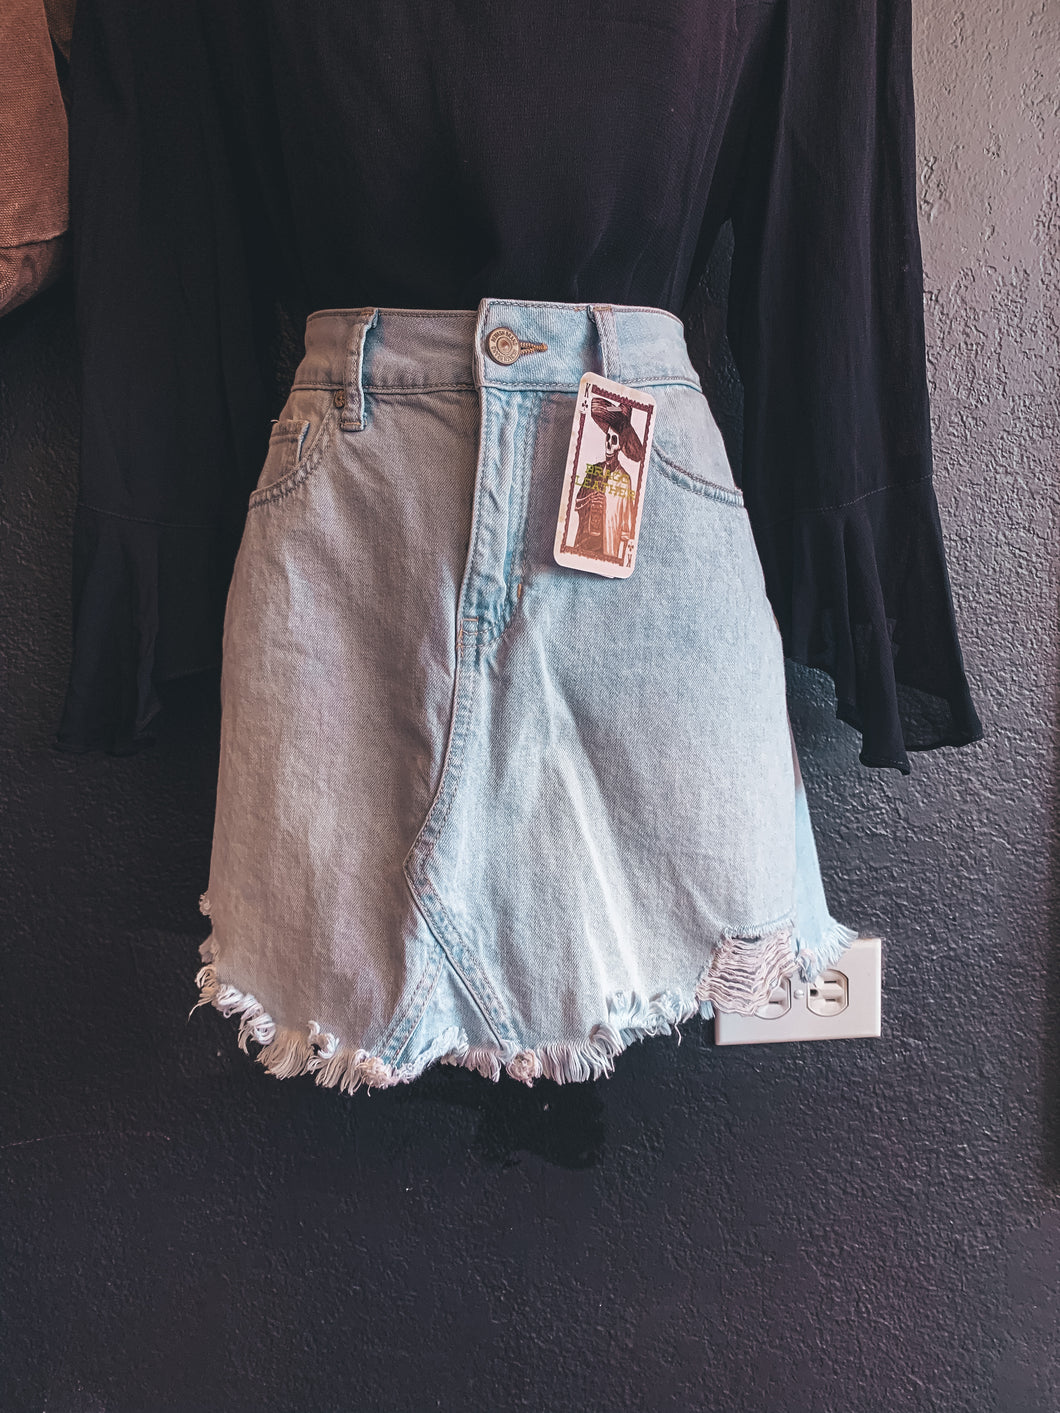 Jean Skirt—size 11/30